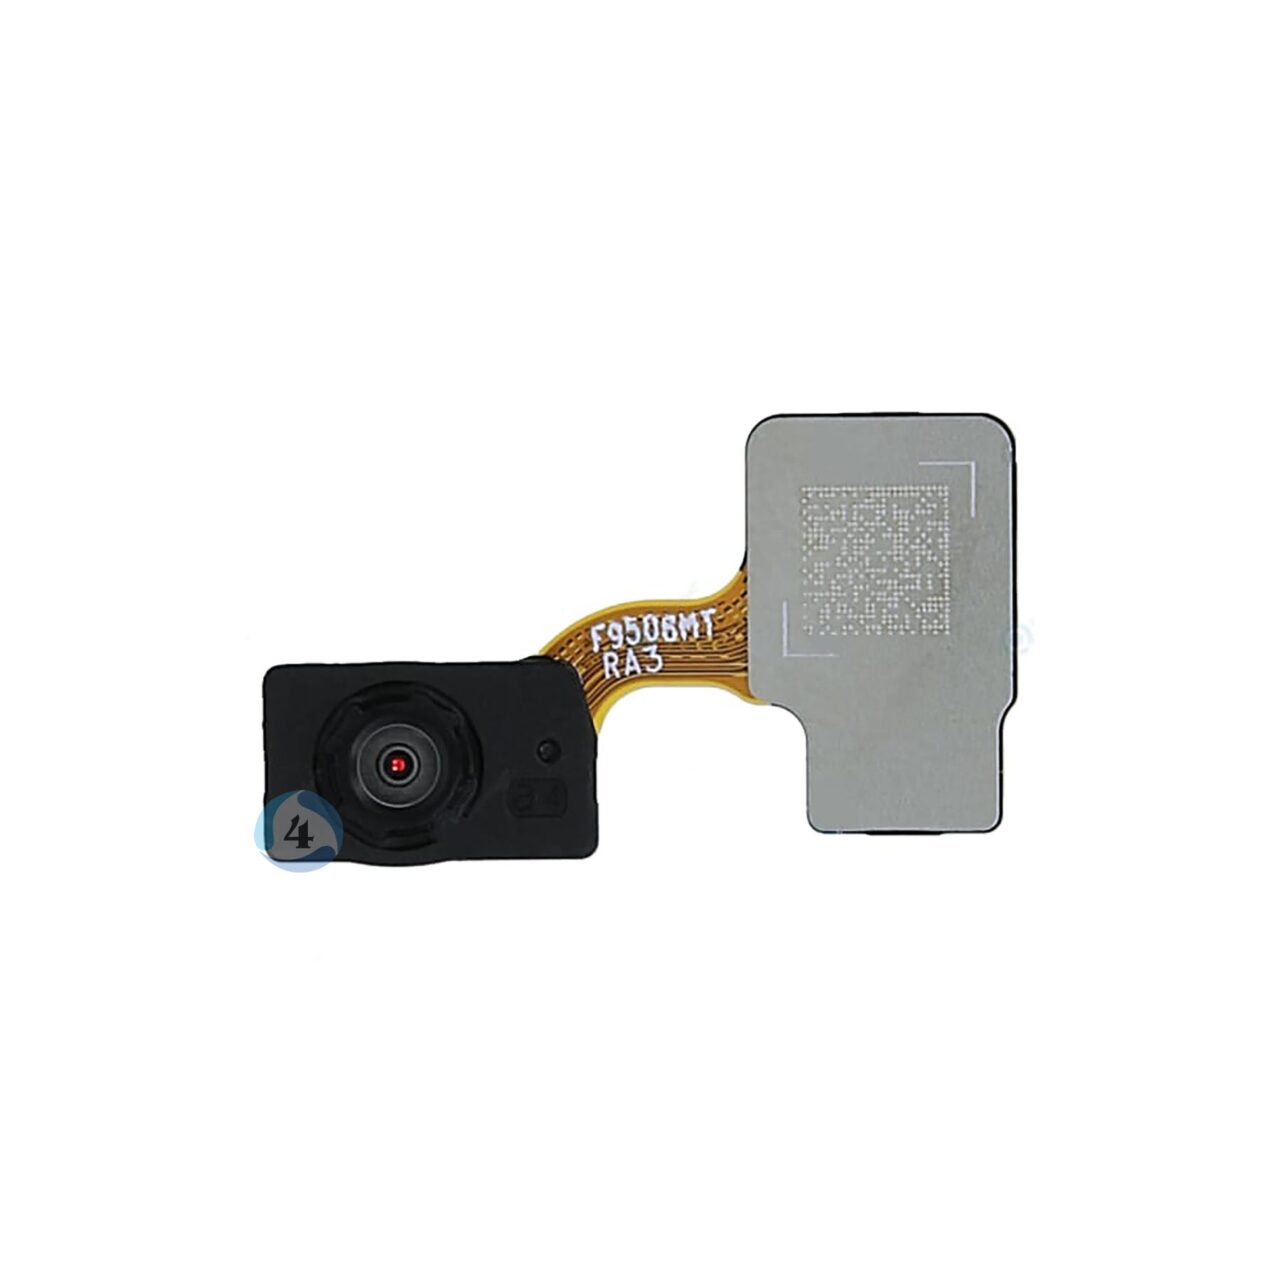 Huawei P30 Pro finger scanner sensor